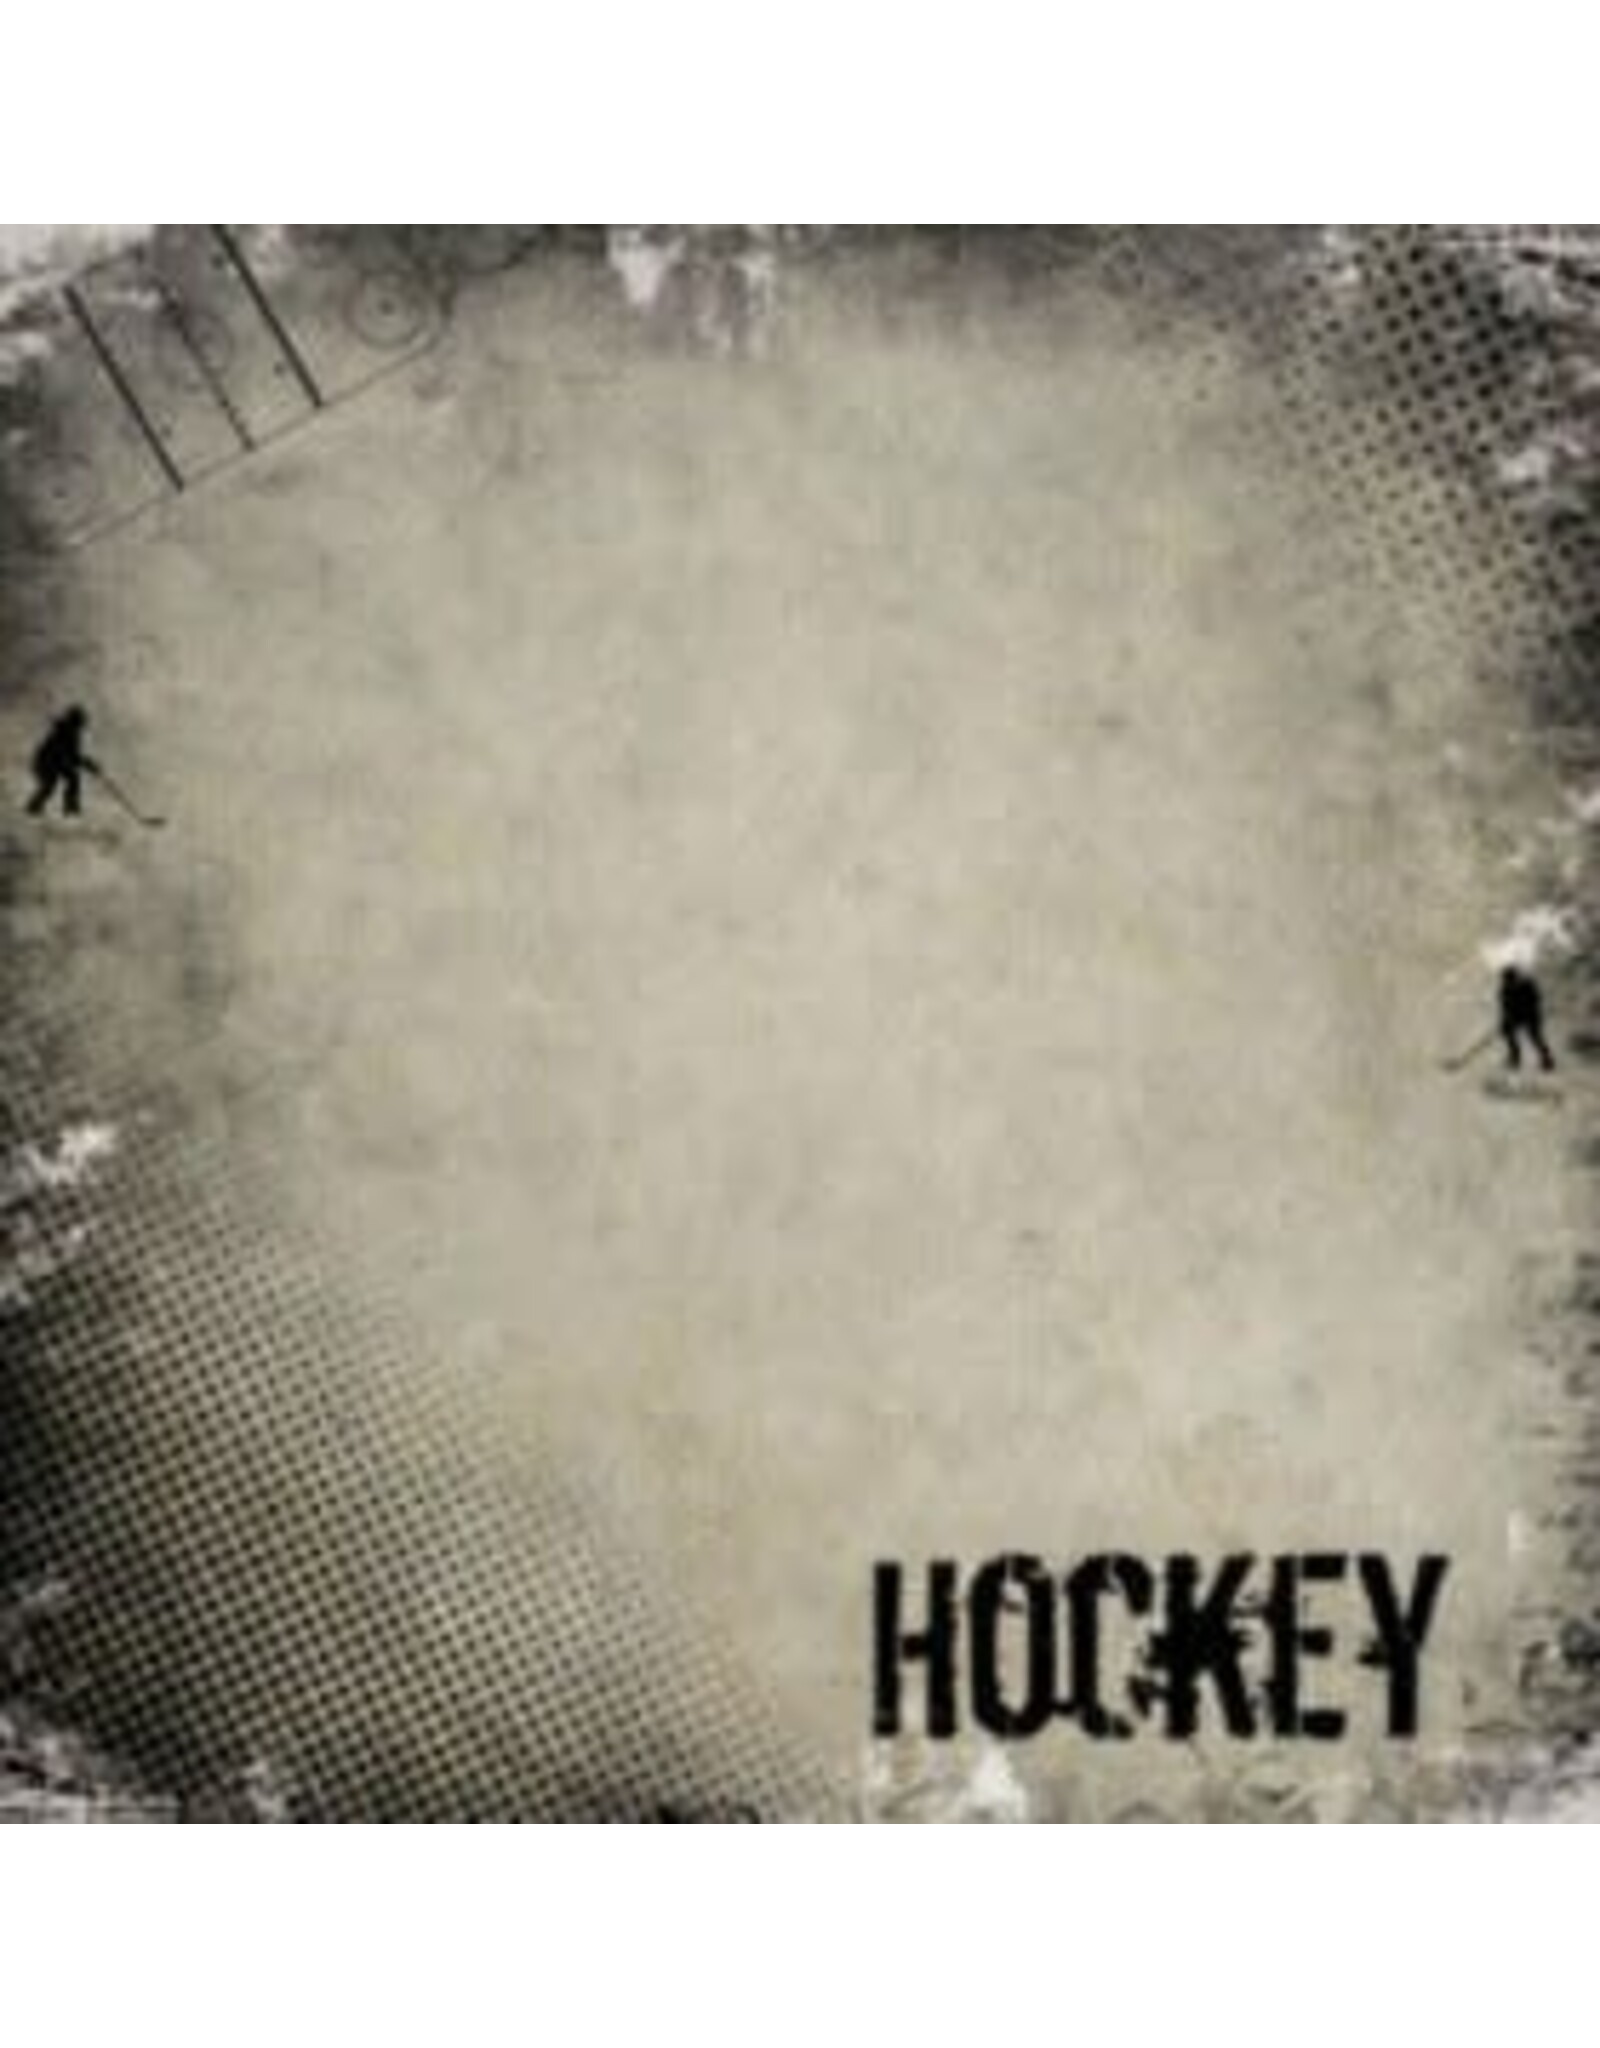 Hockey antique paper